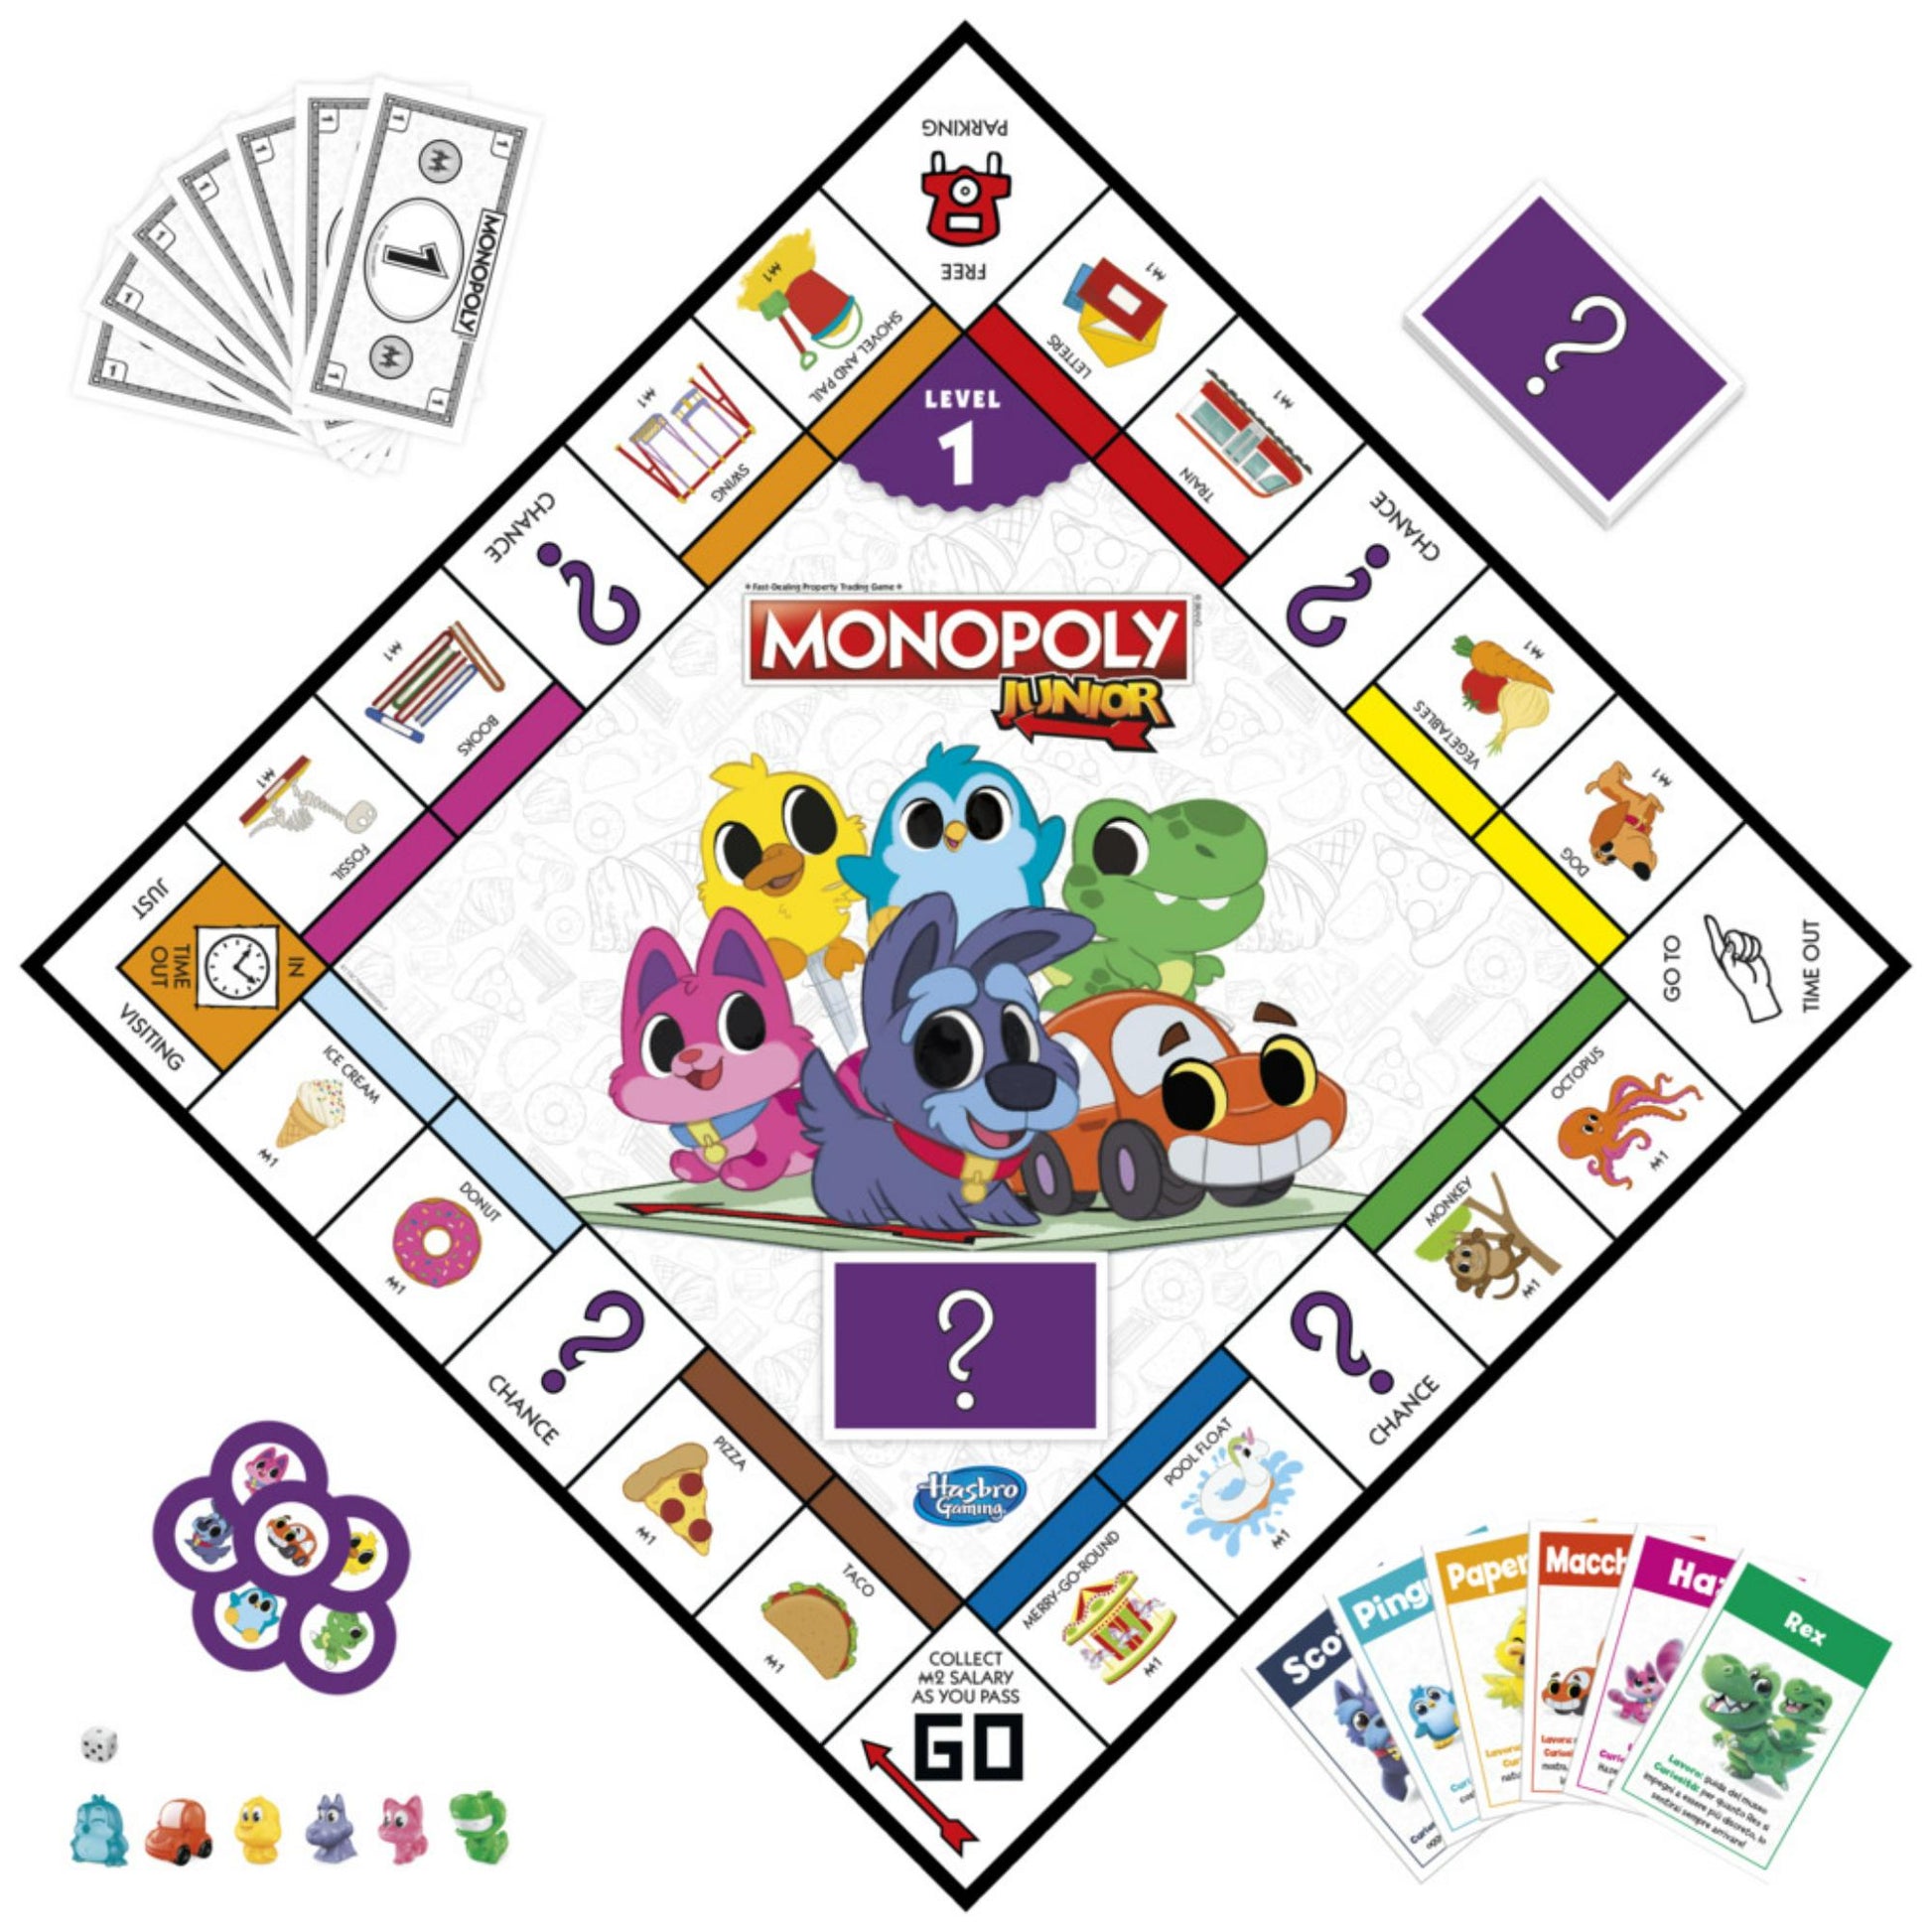 MONOPOLY JUNIOR 2 GAMES IN 1